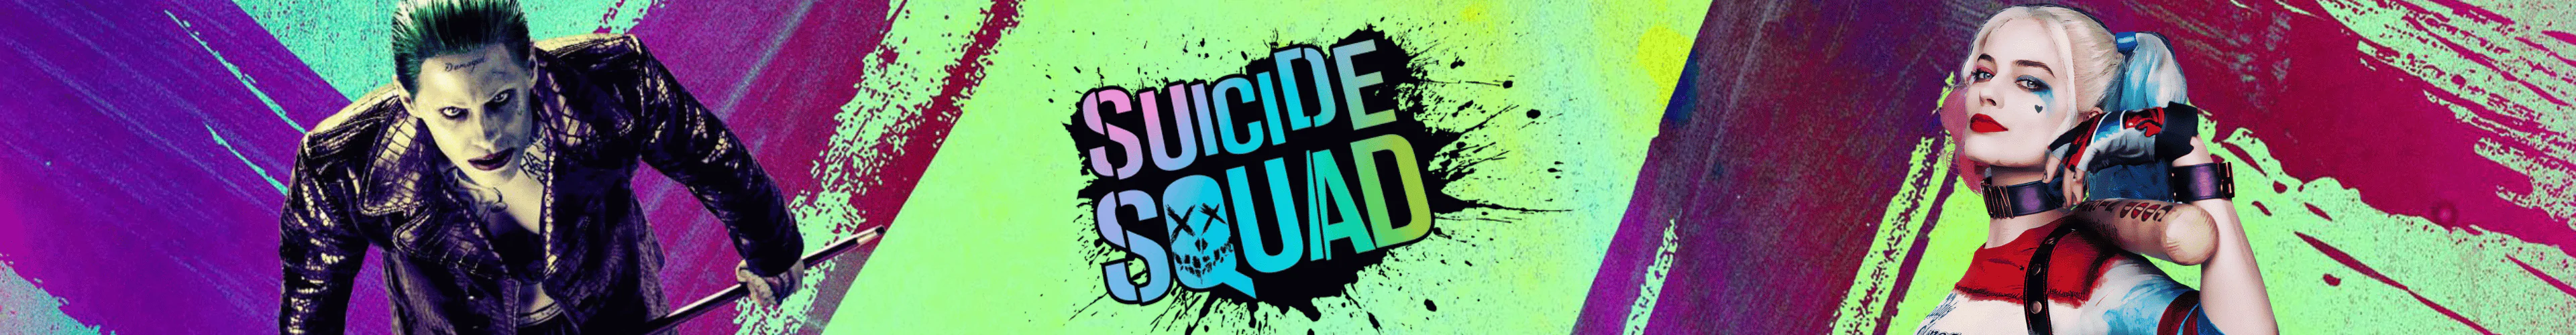 Suicide Squad figuren banner